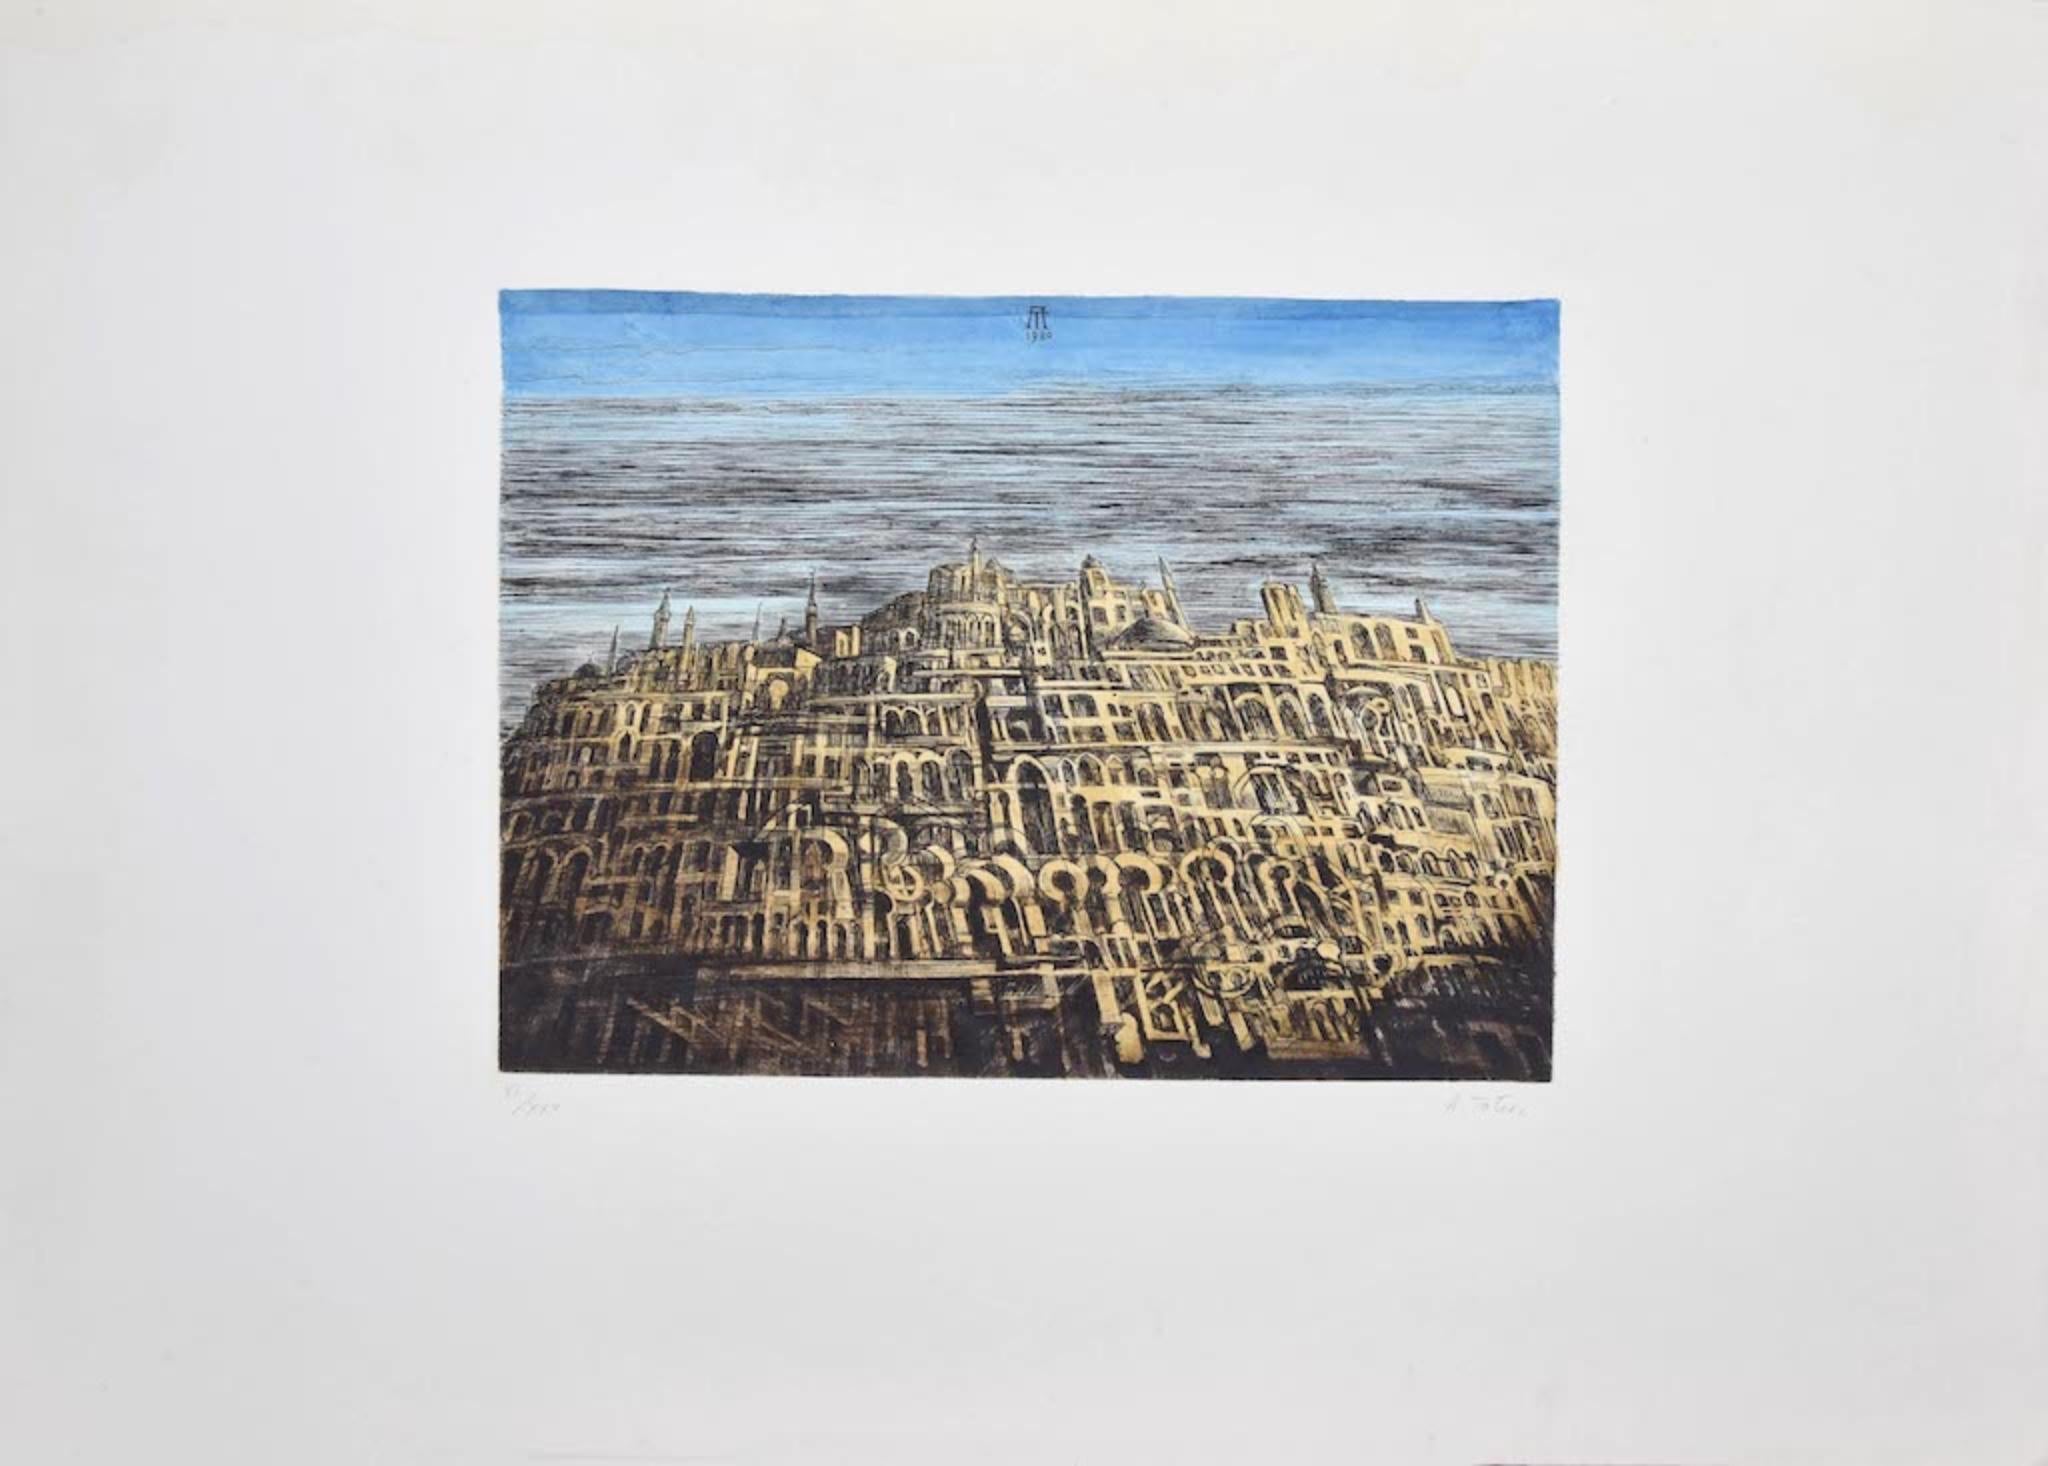 Antonio De Totero Figurative Print - The City - Etching by Antonio de Totero - Late 20th Century